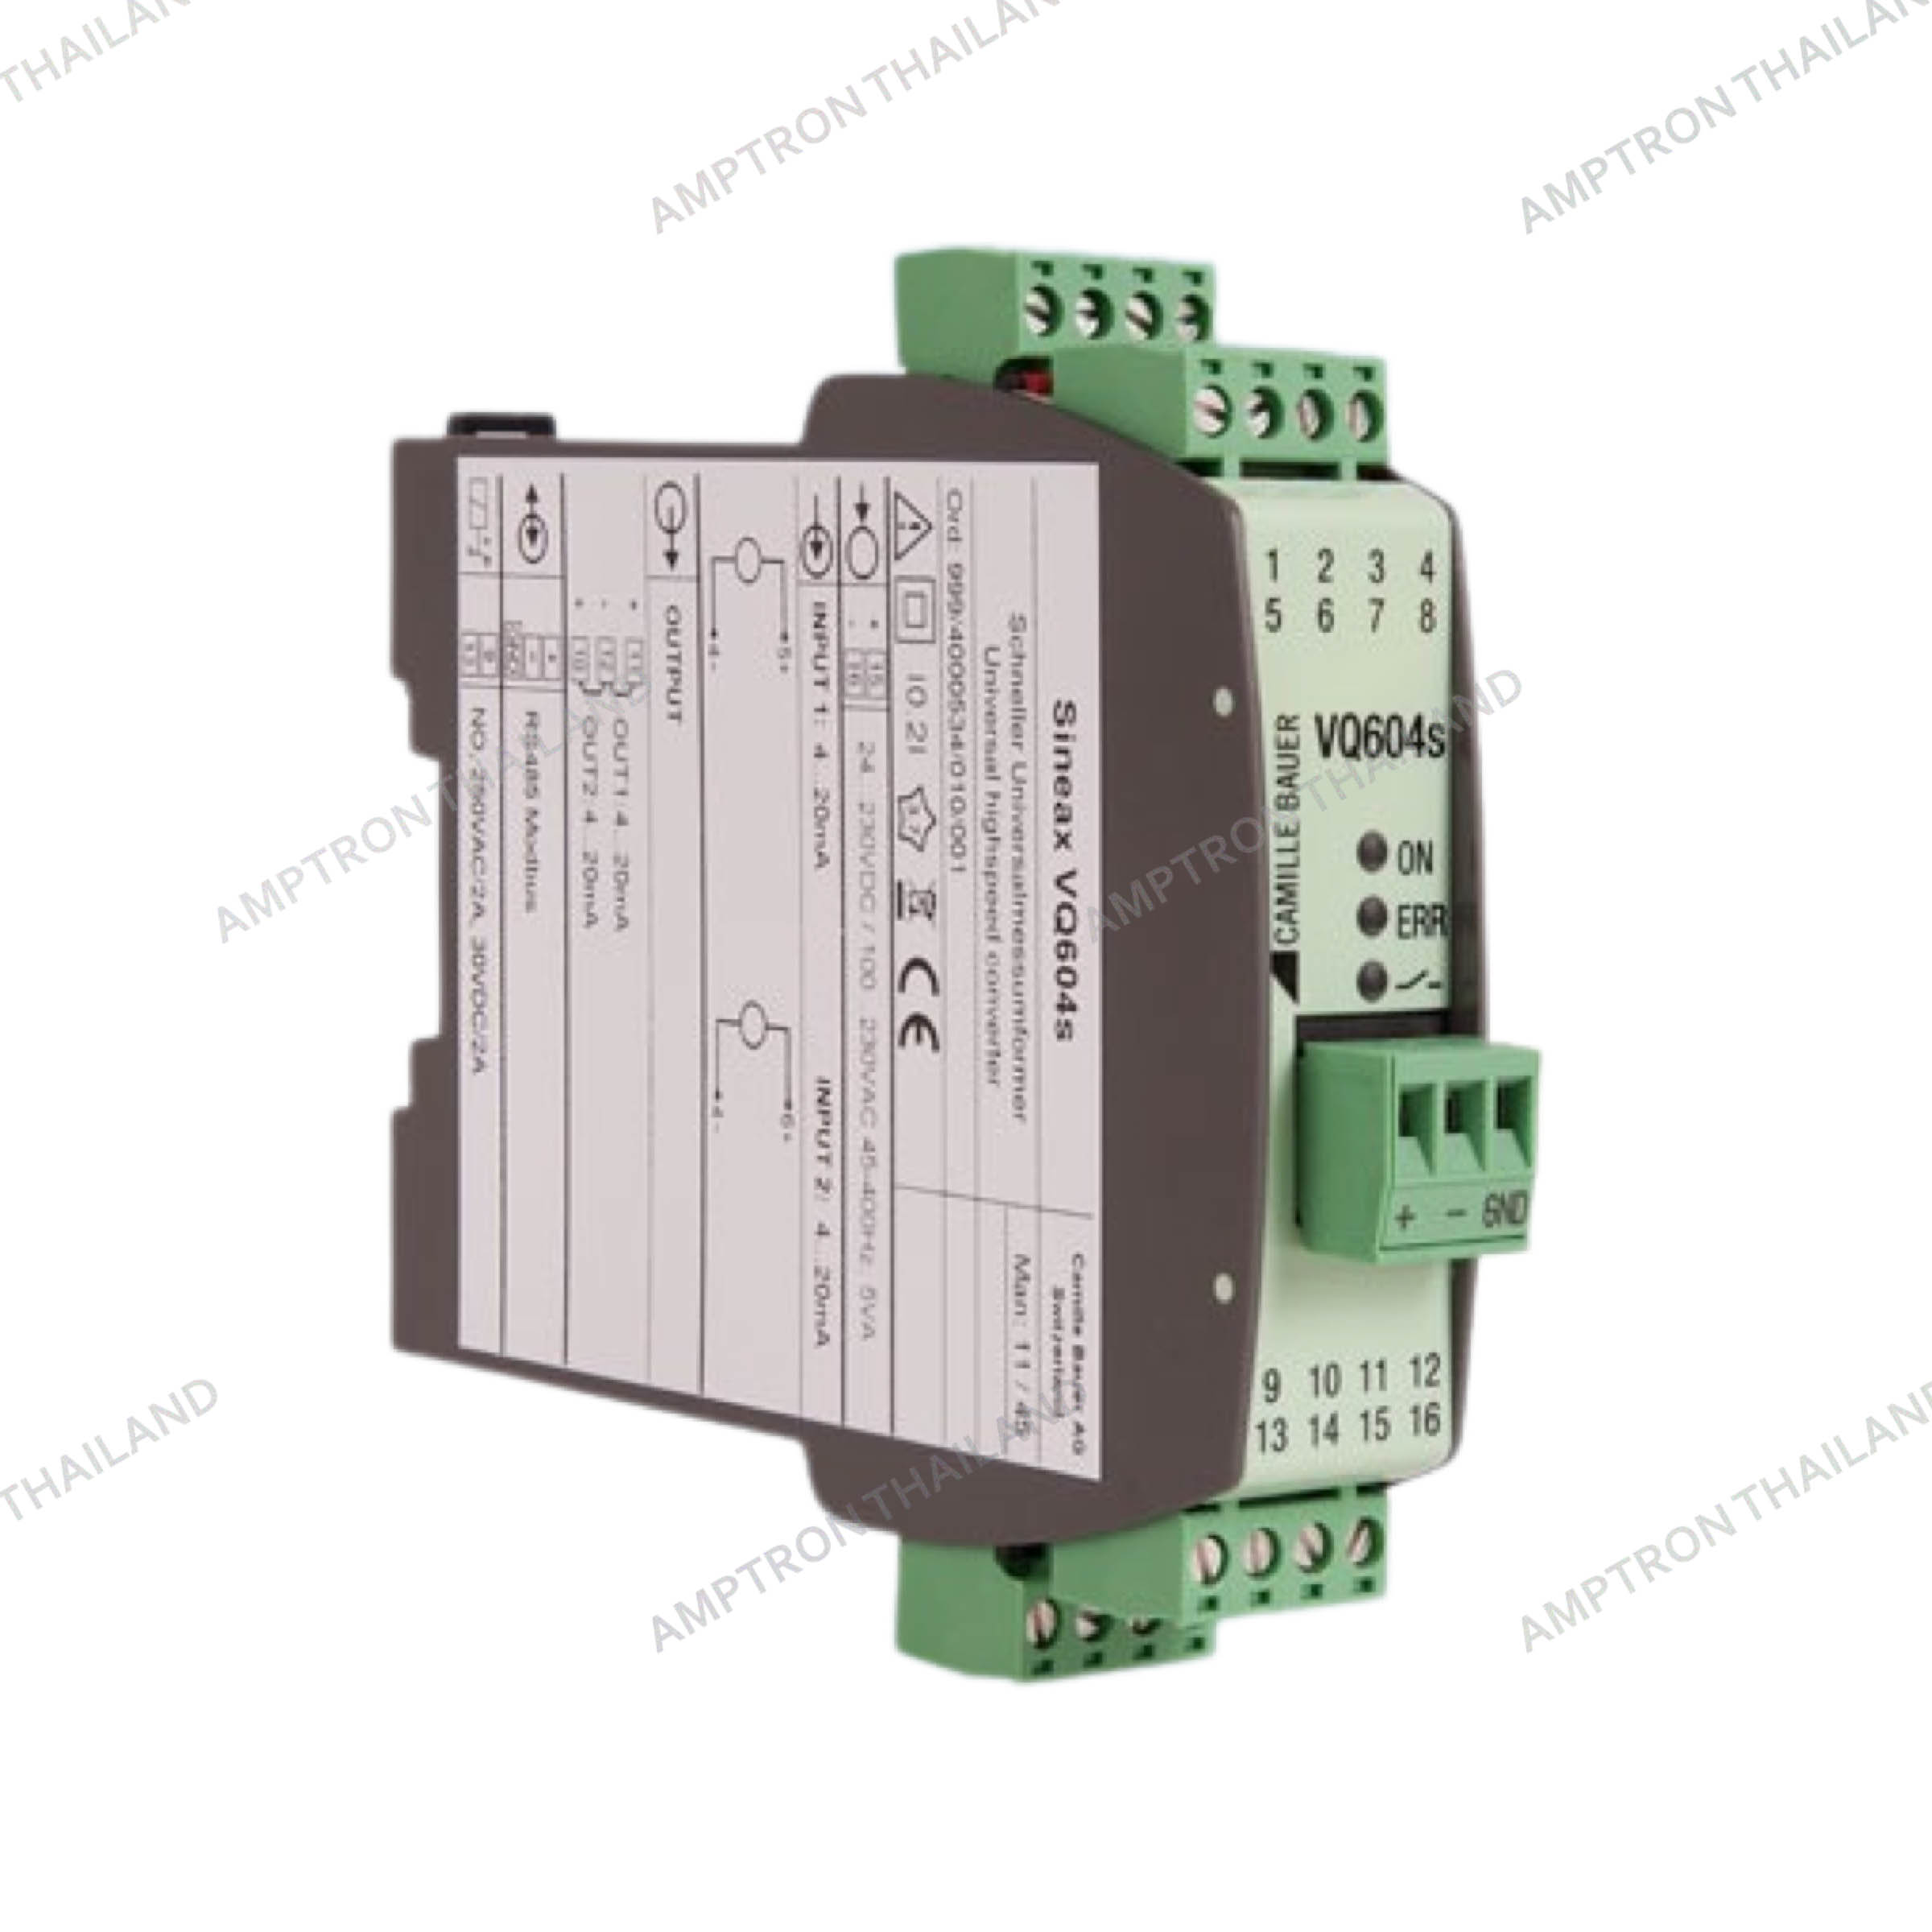 SINEAX VQ604s Programmable multifunctional transmitter